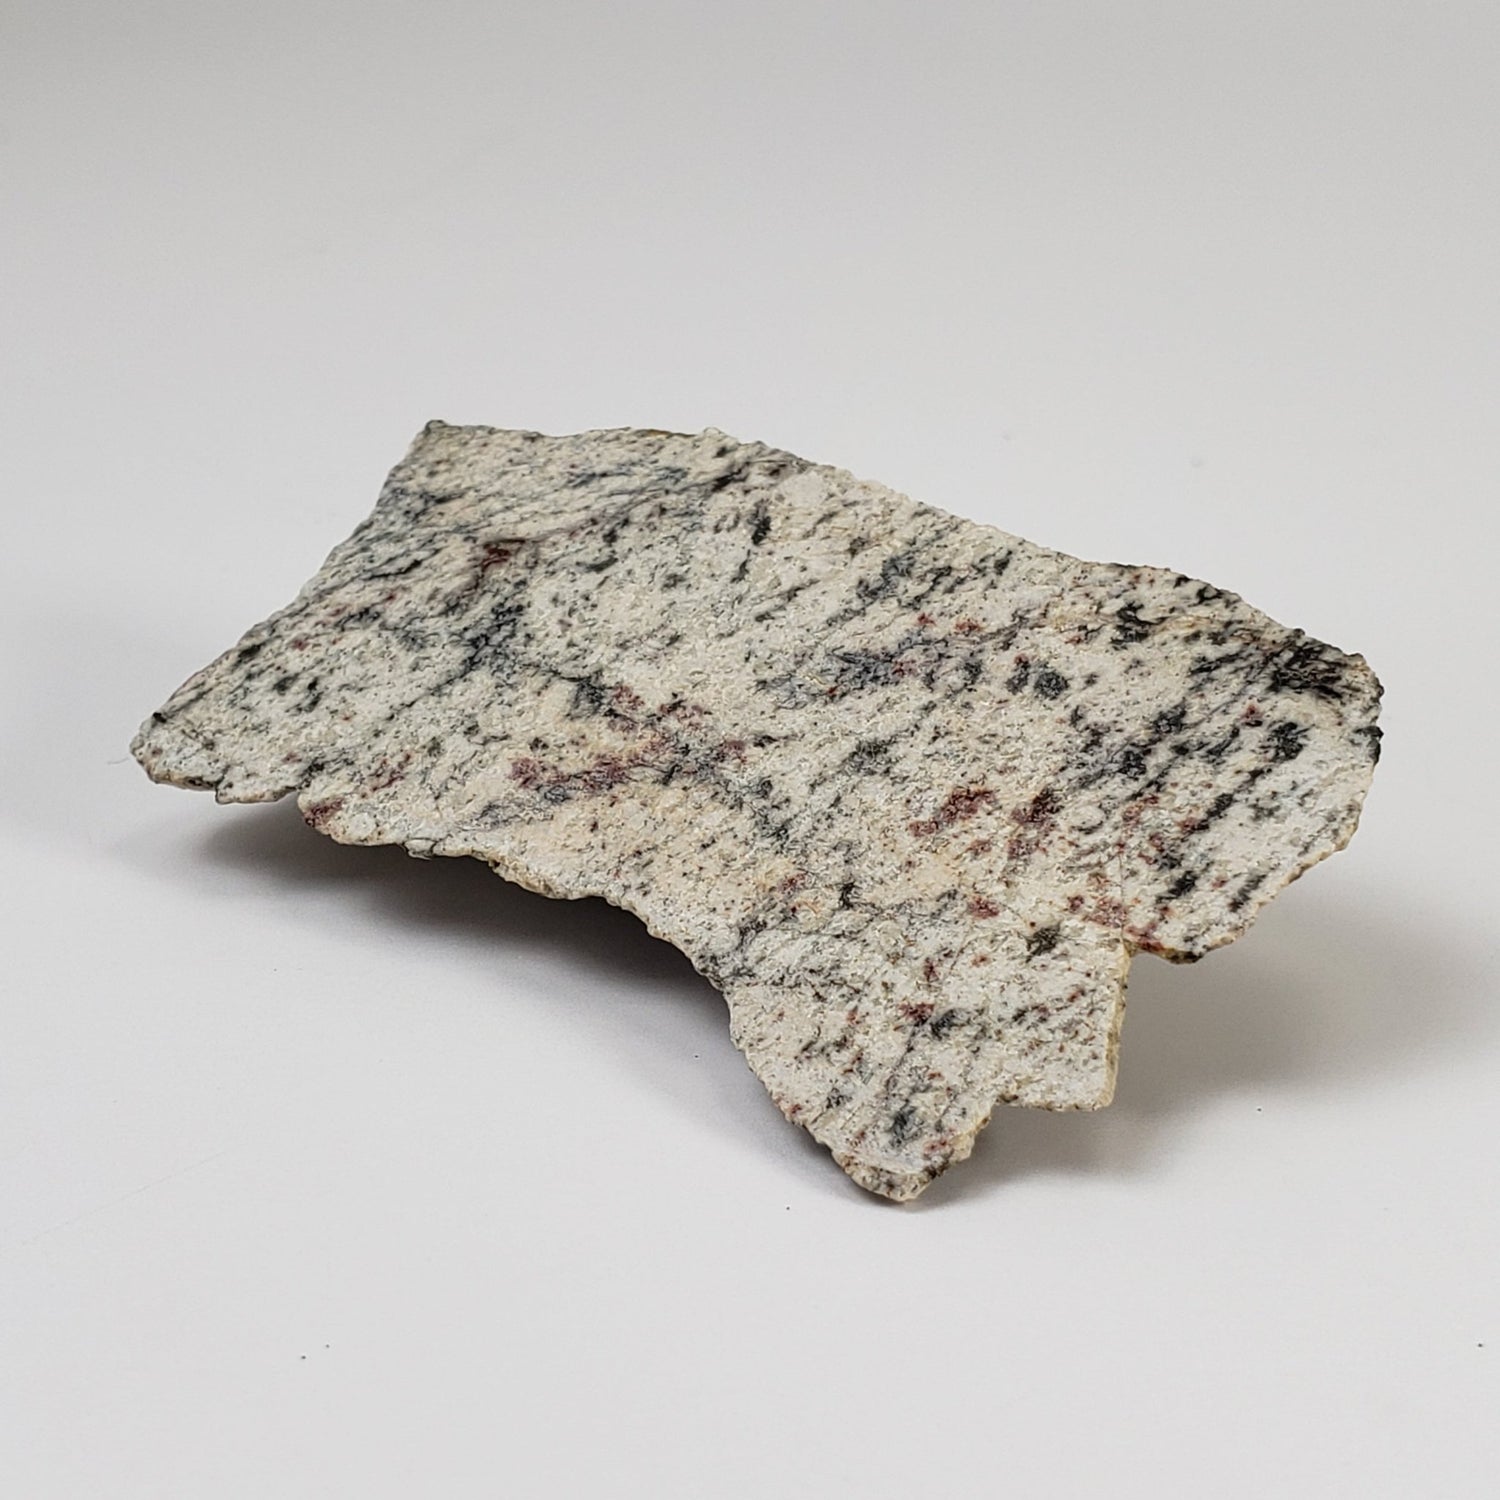 Impactite Melt Breccia Suevite | Alte Bürg Quarry | 28.3 Grams | Ries Crater, Germany